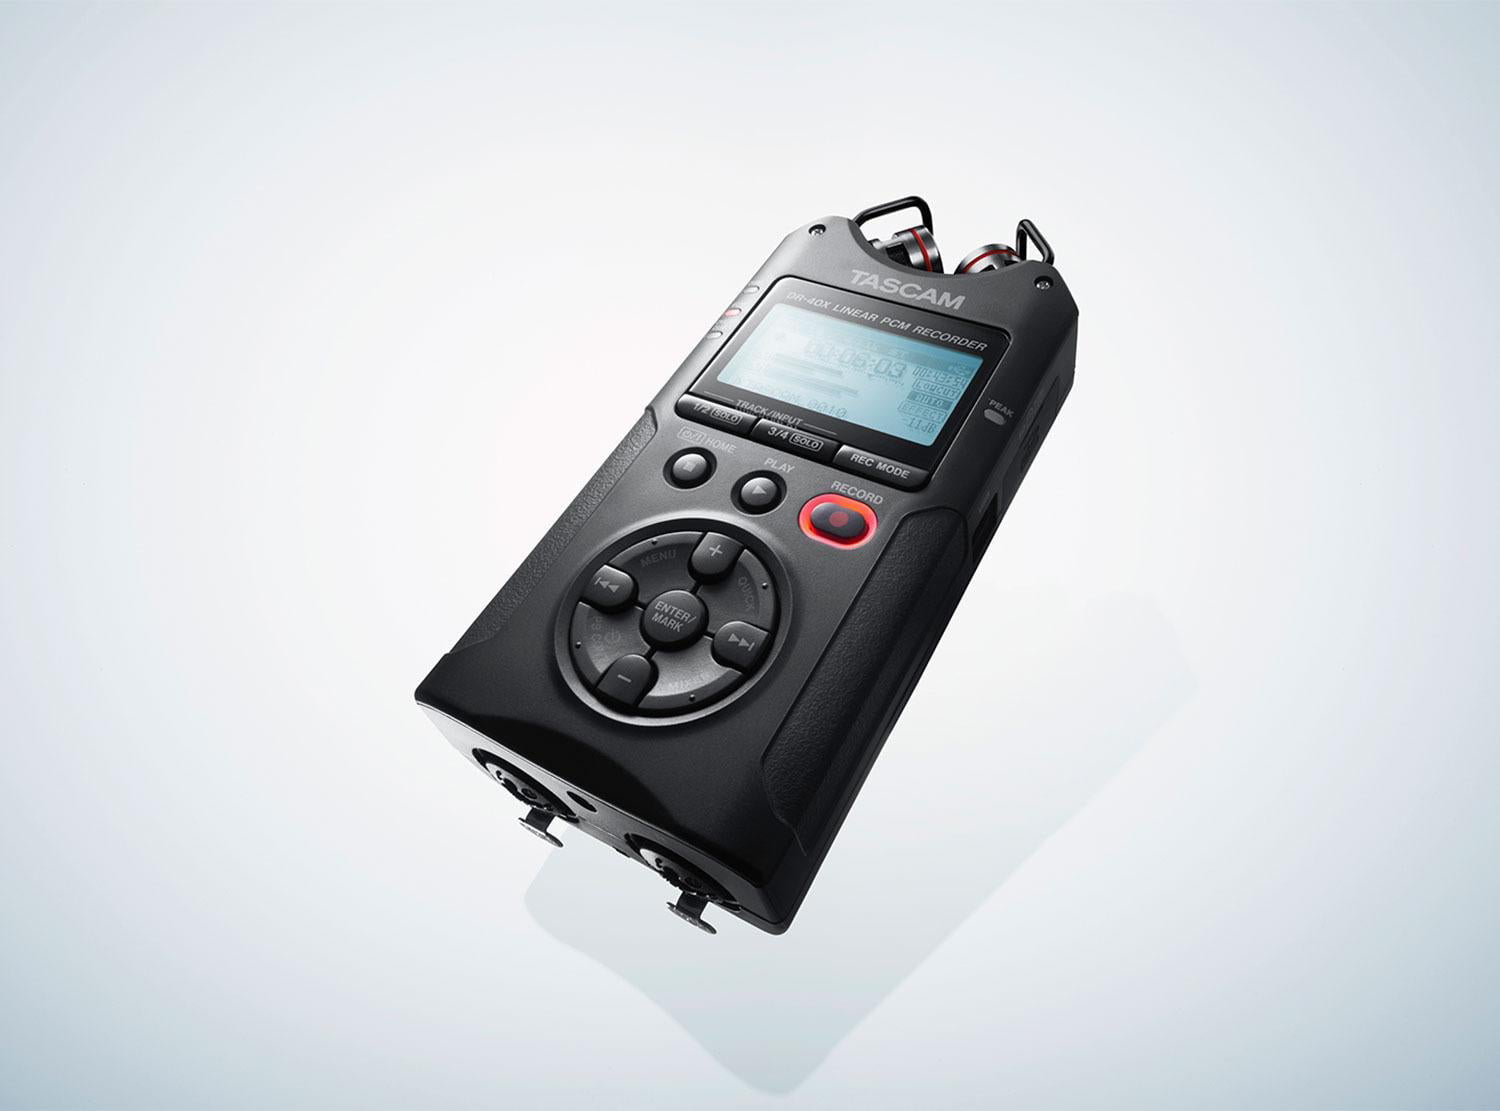 Tascam DR-40X Four Track Handheld Recorder